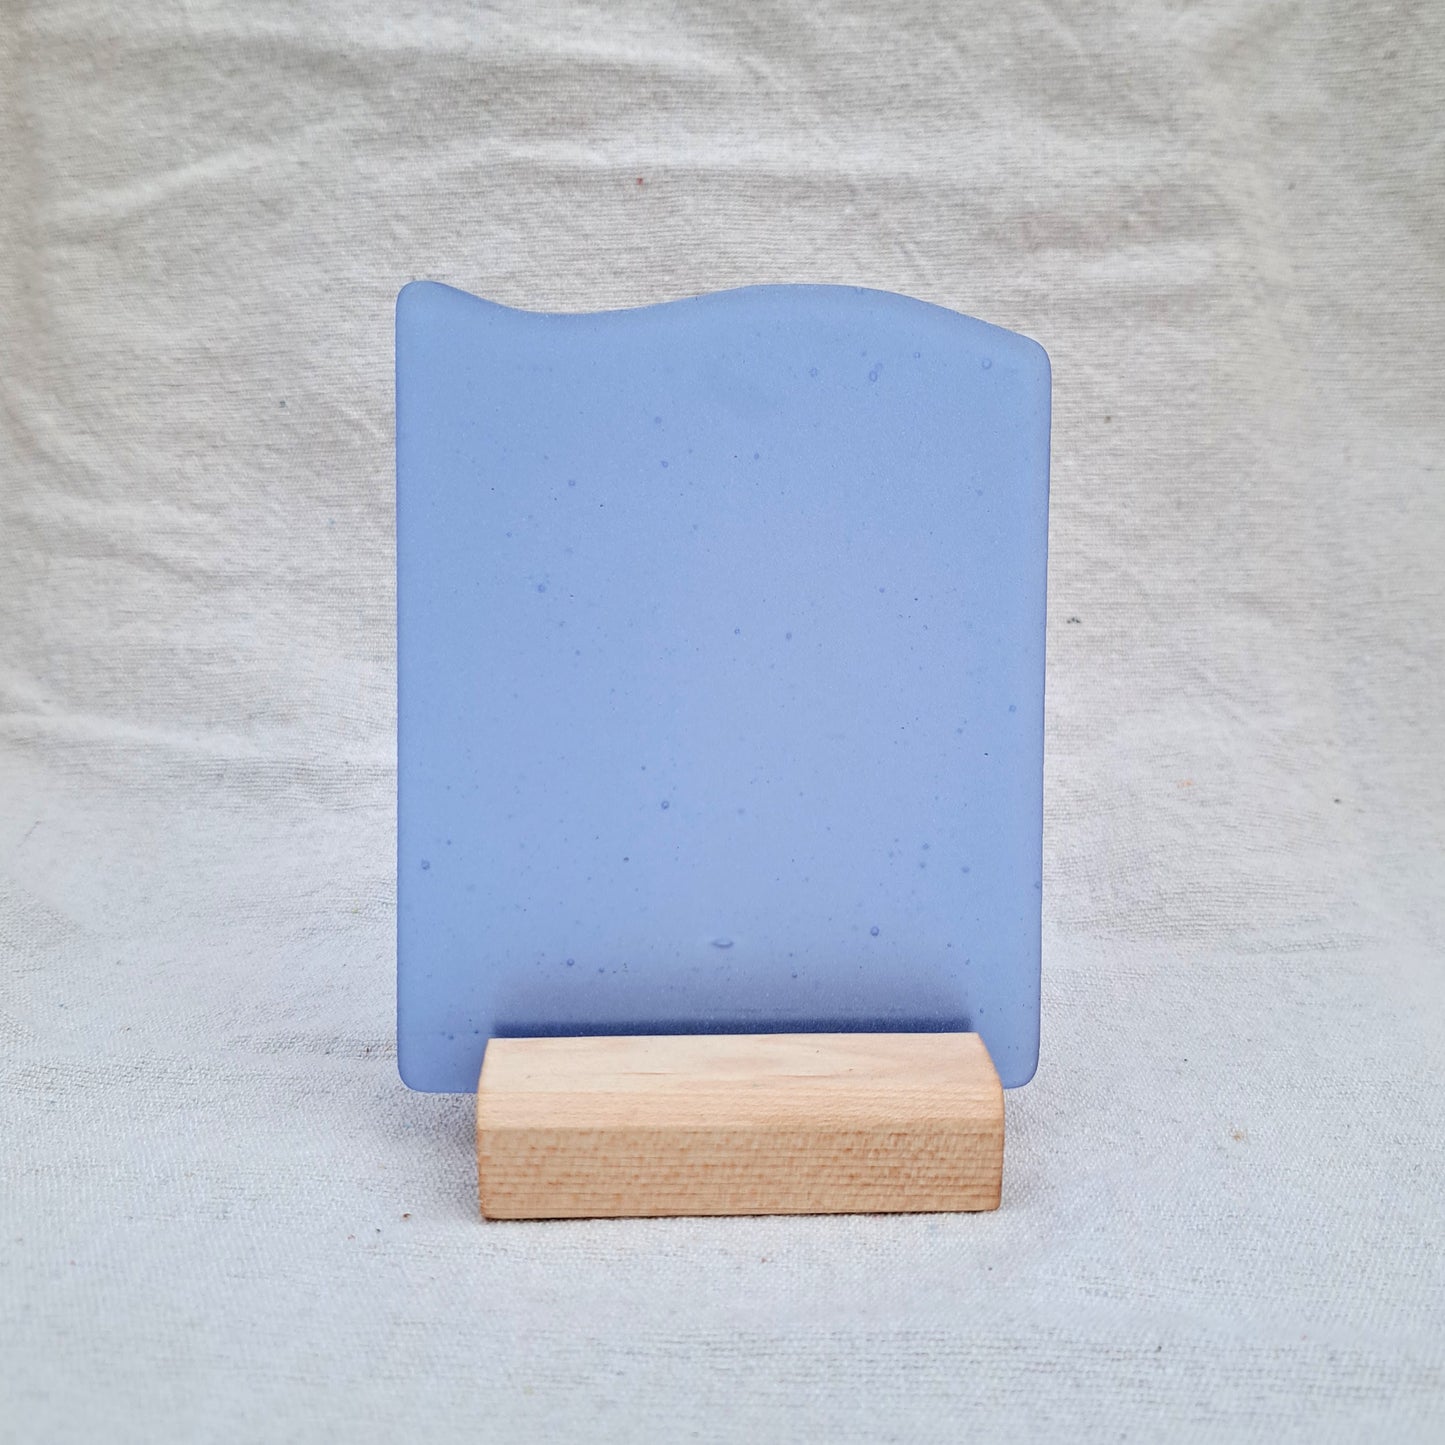 Cornflower blue sea glass sign blank - 5x4 inch tumble glass piece